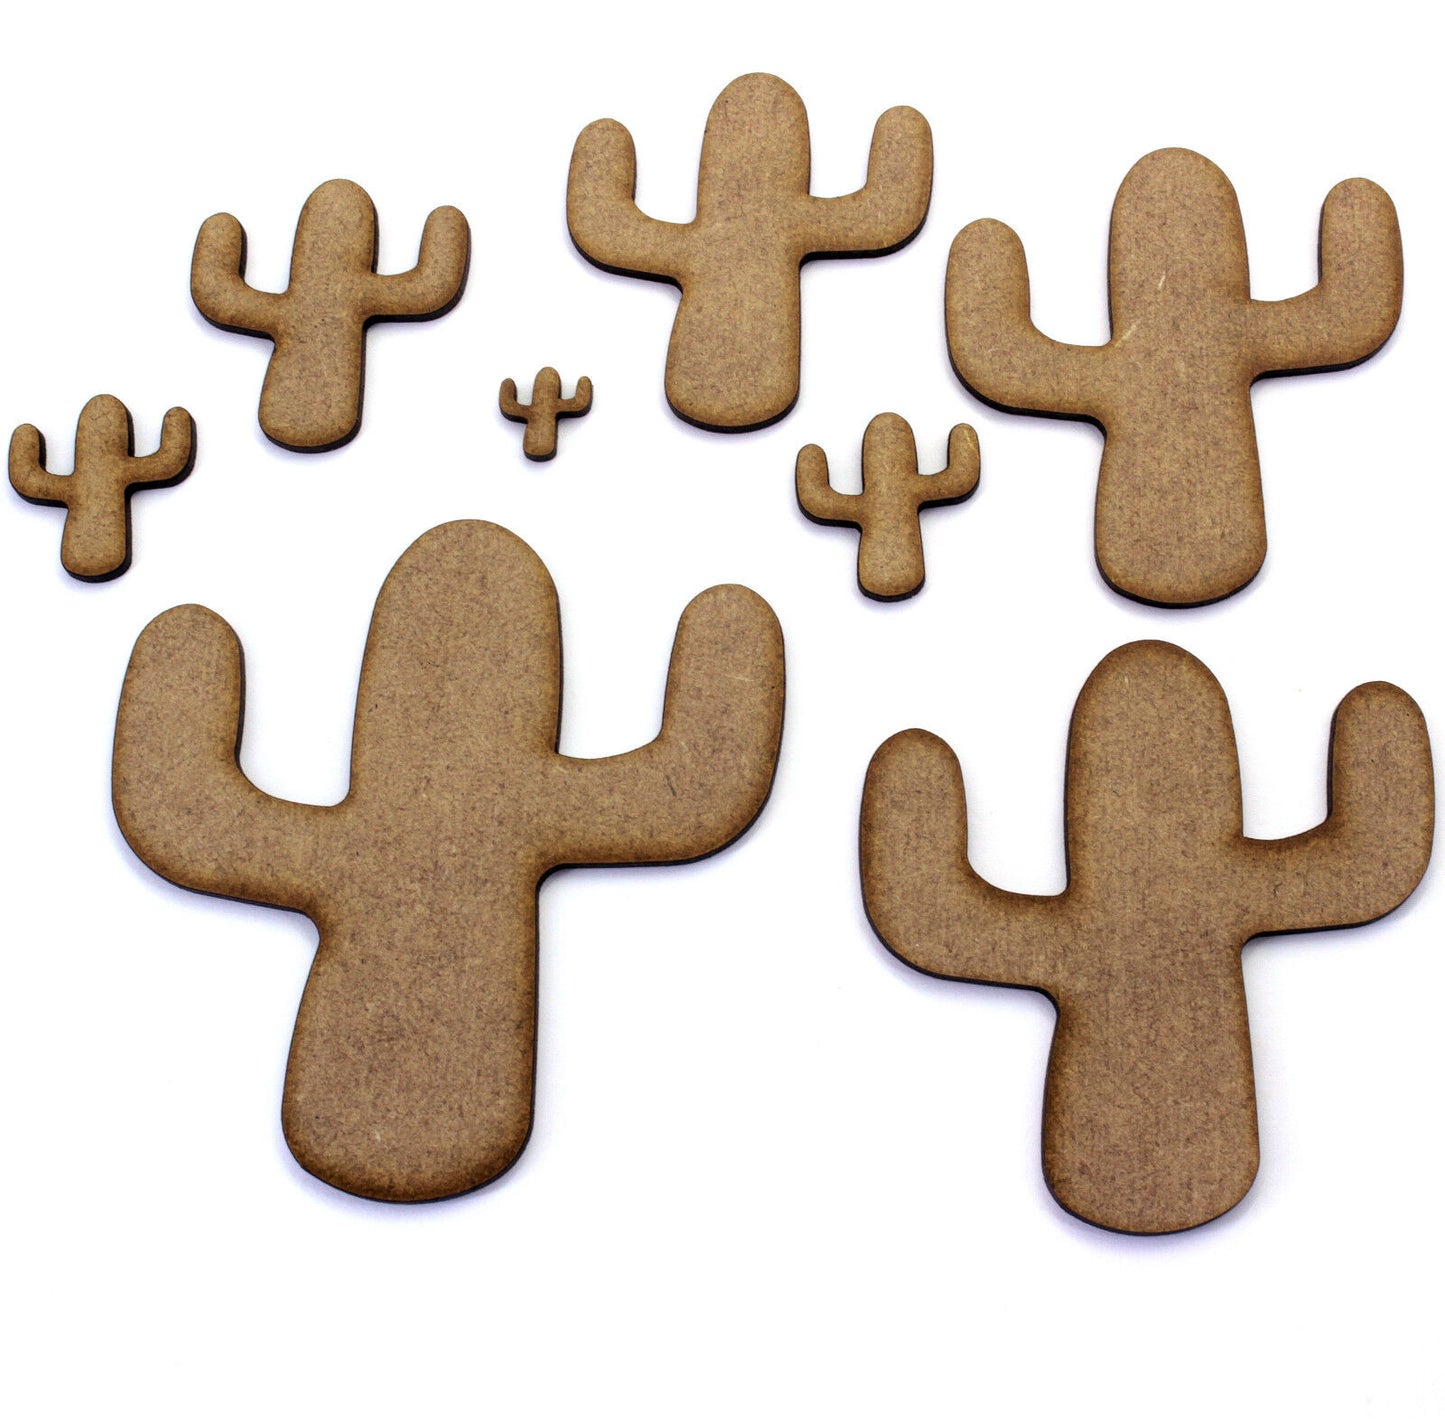 Cactus / Cacti Craft Shapes, Embellishments, Decorations, 2mm MDF Wood.